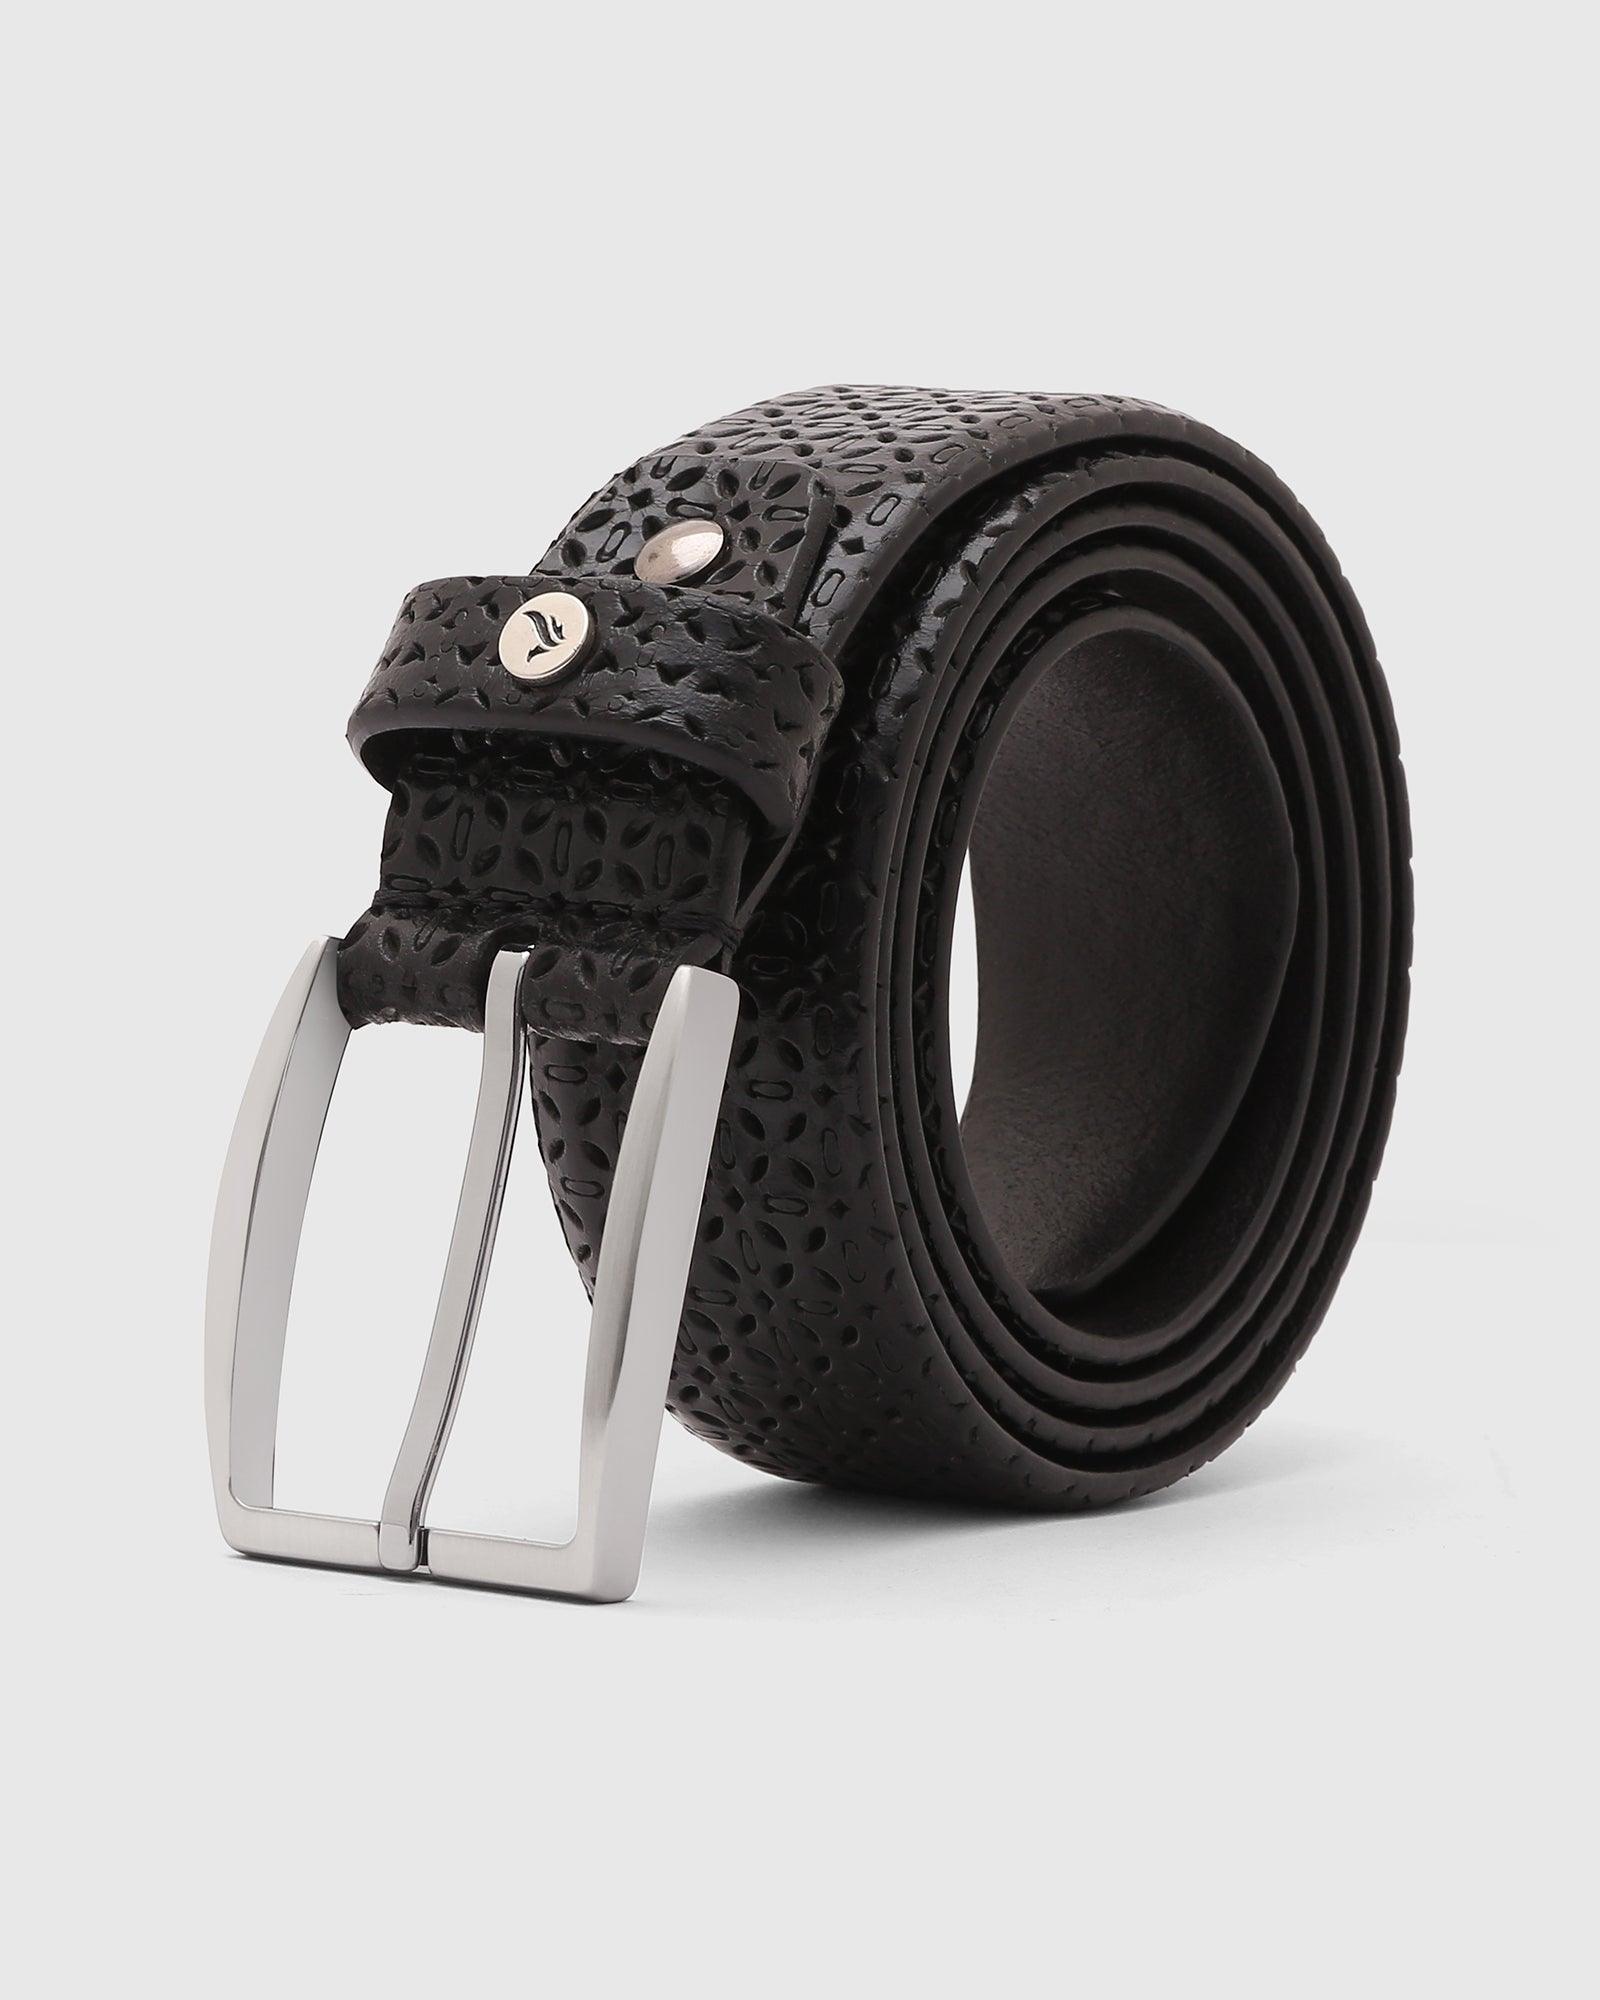 Leather Black Textured Belt - Qampel